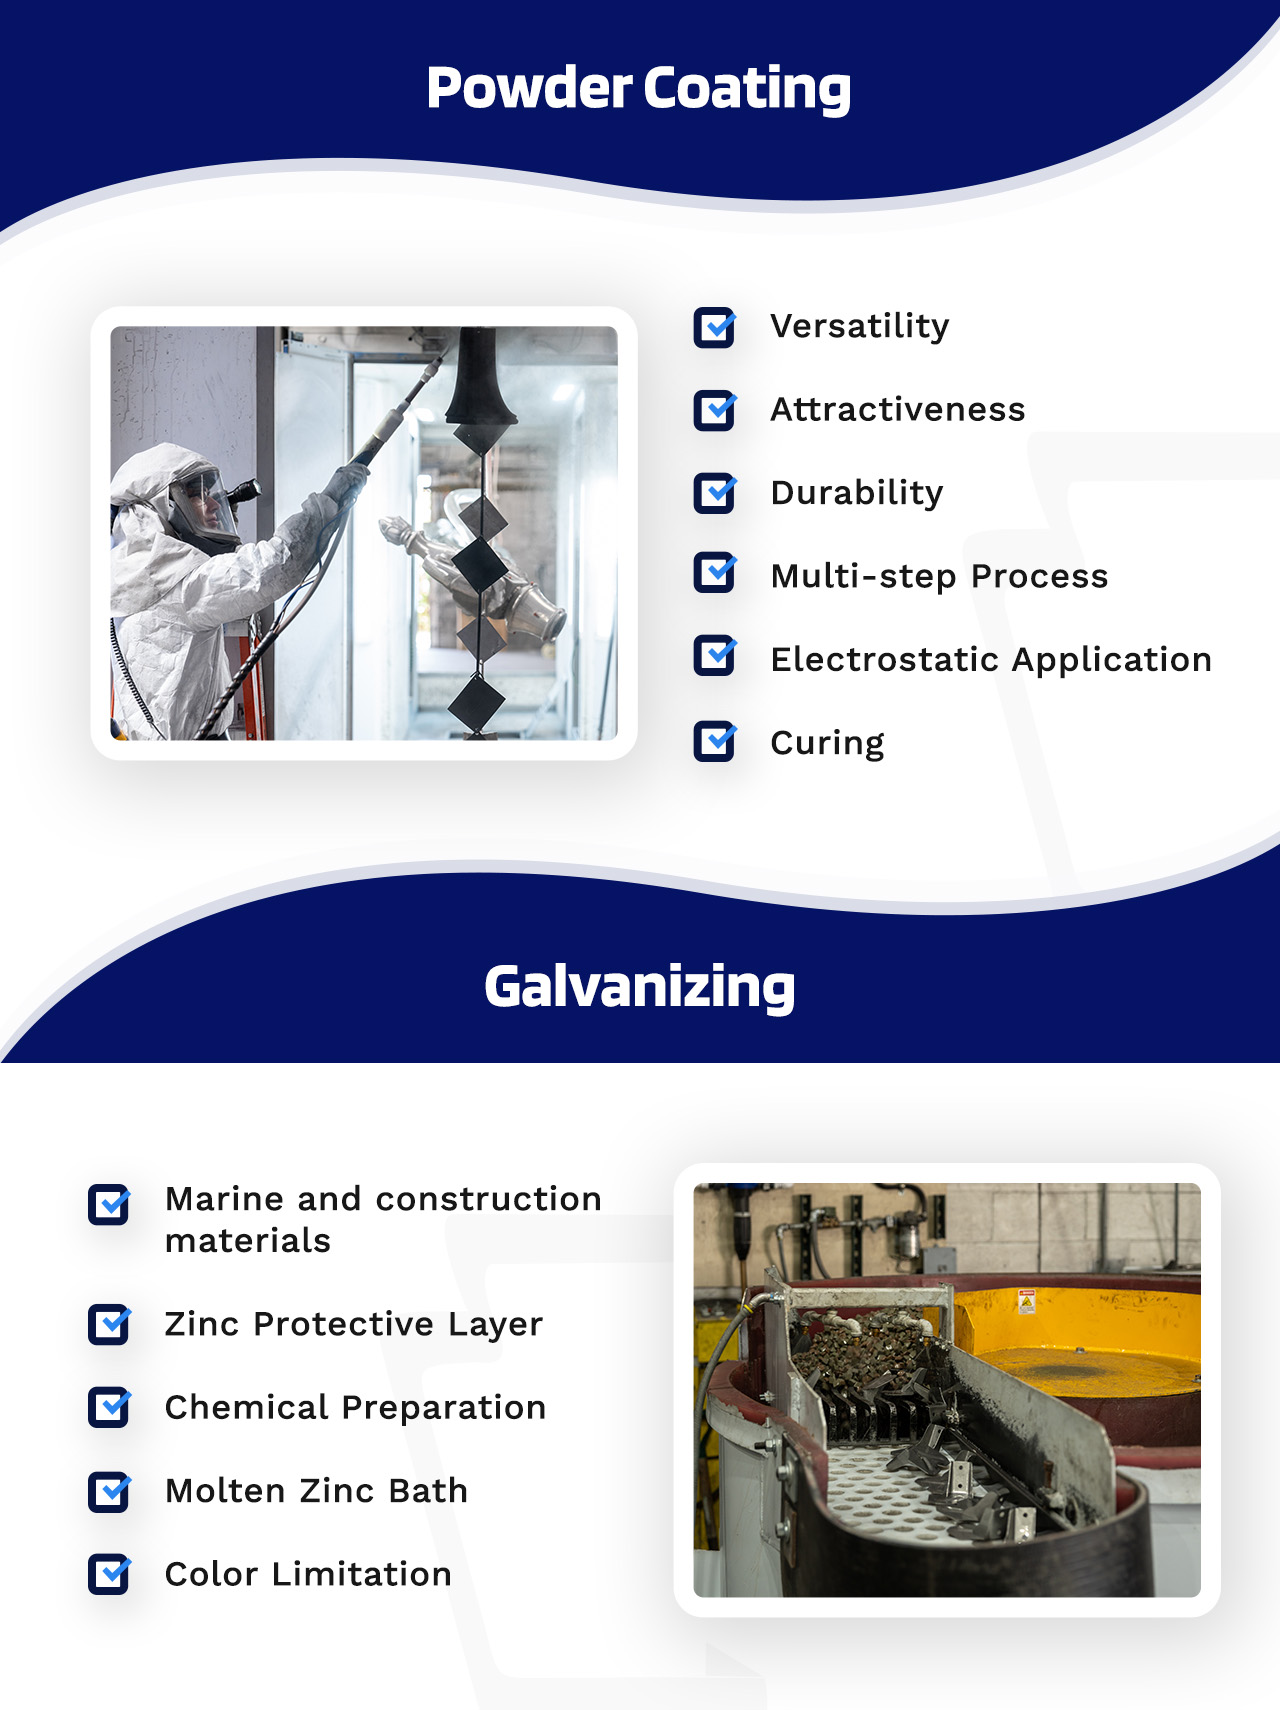 comparing powder coating and galvanizing